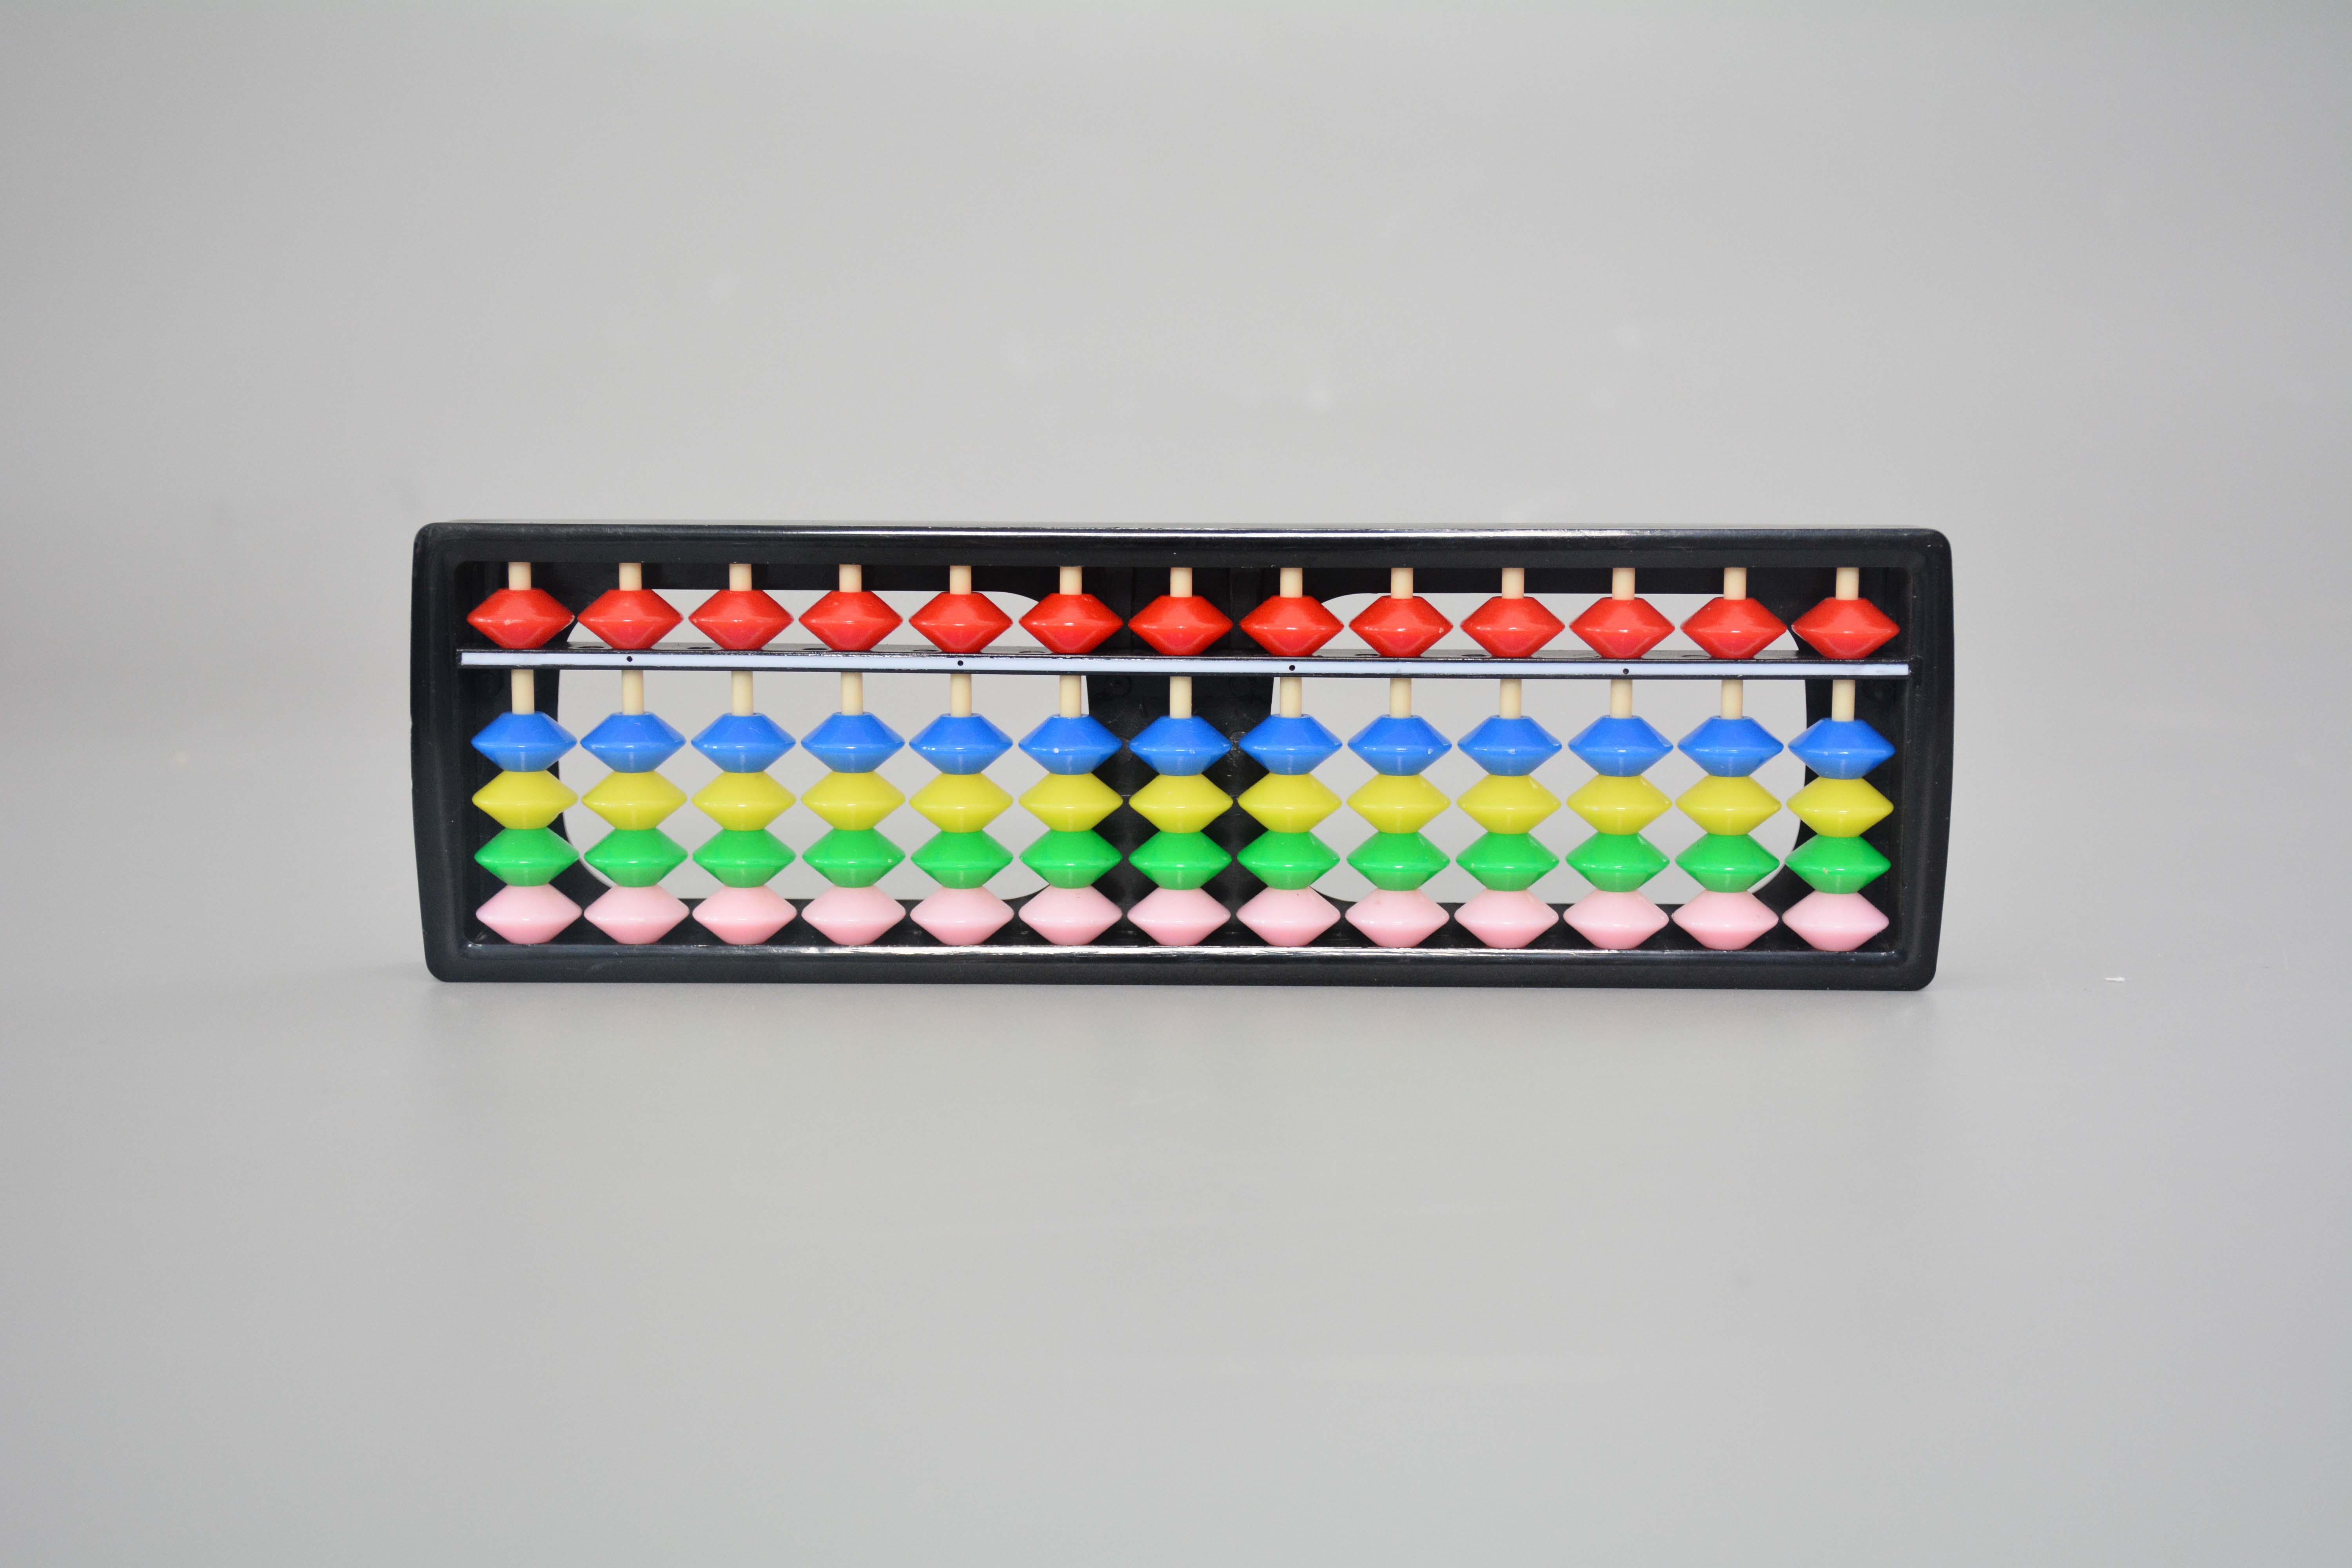 abacus educational